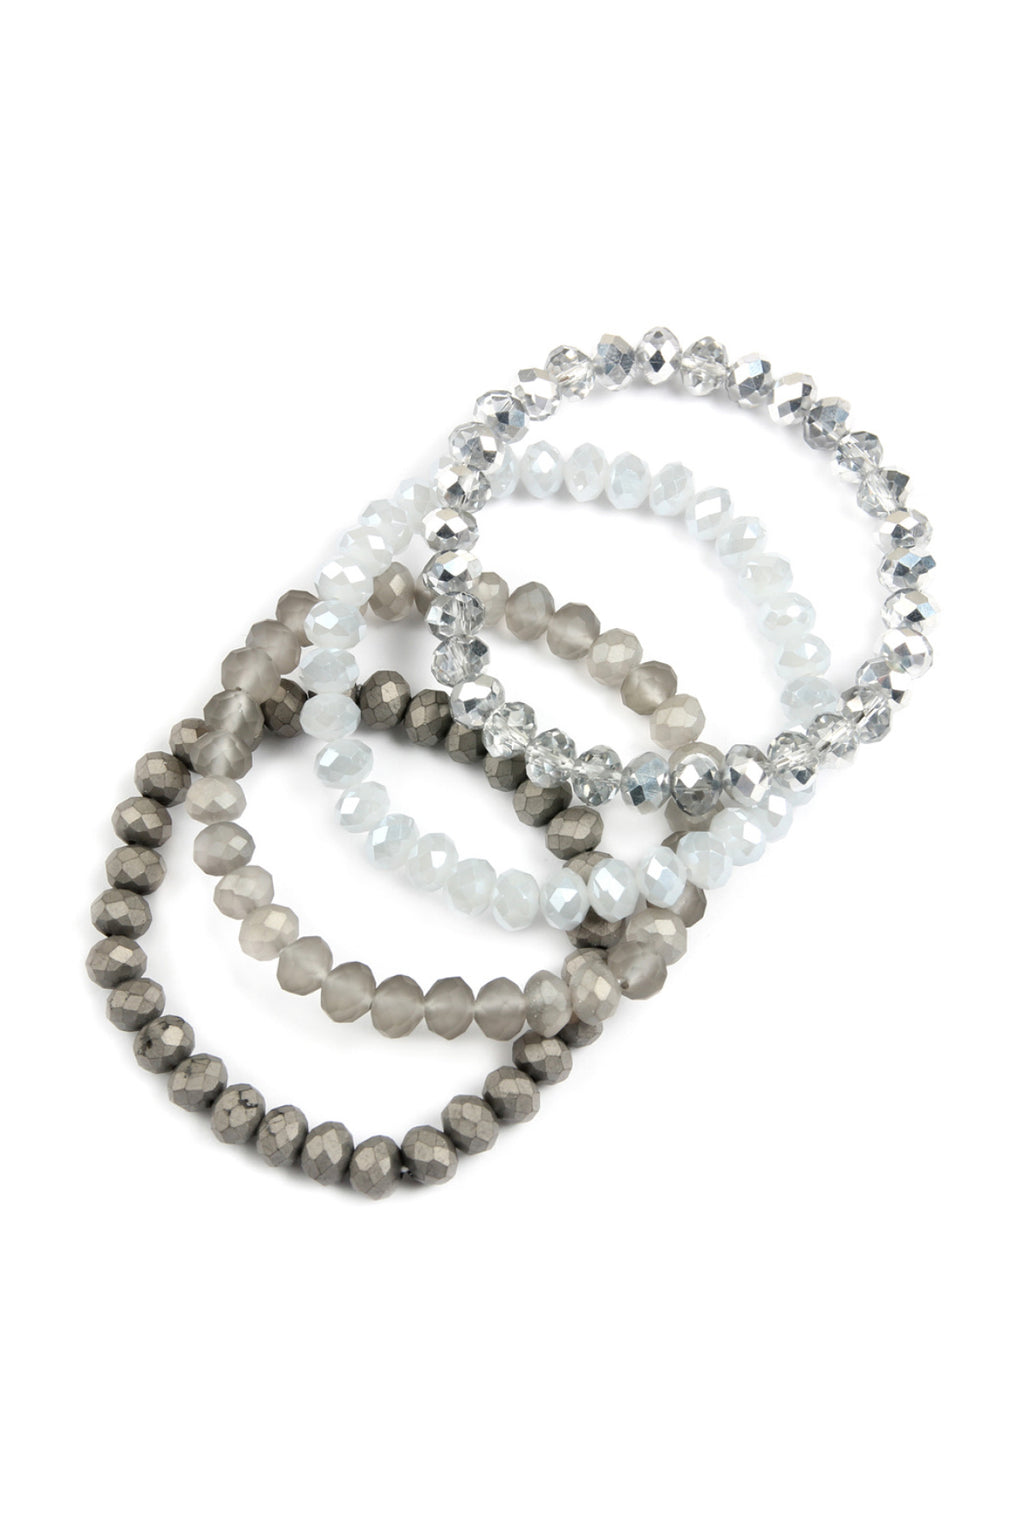 Gray 4 Line Glass Beads Stretch Bracelet - Pack of 6